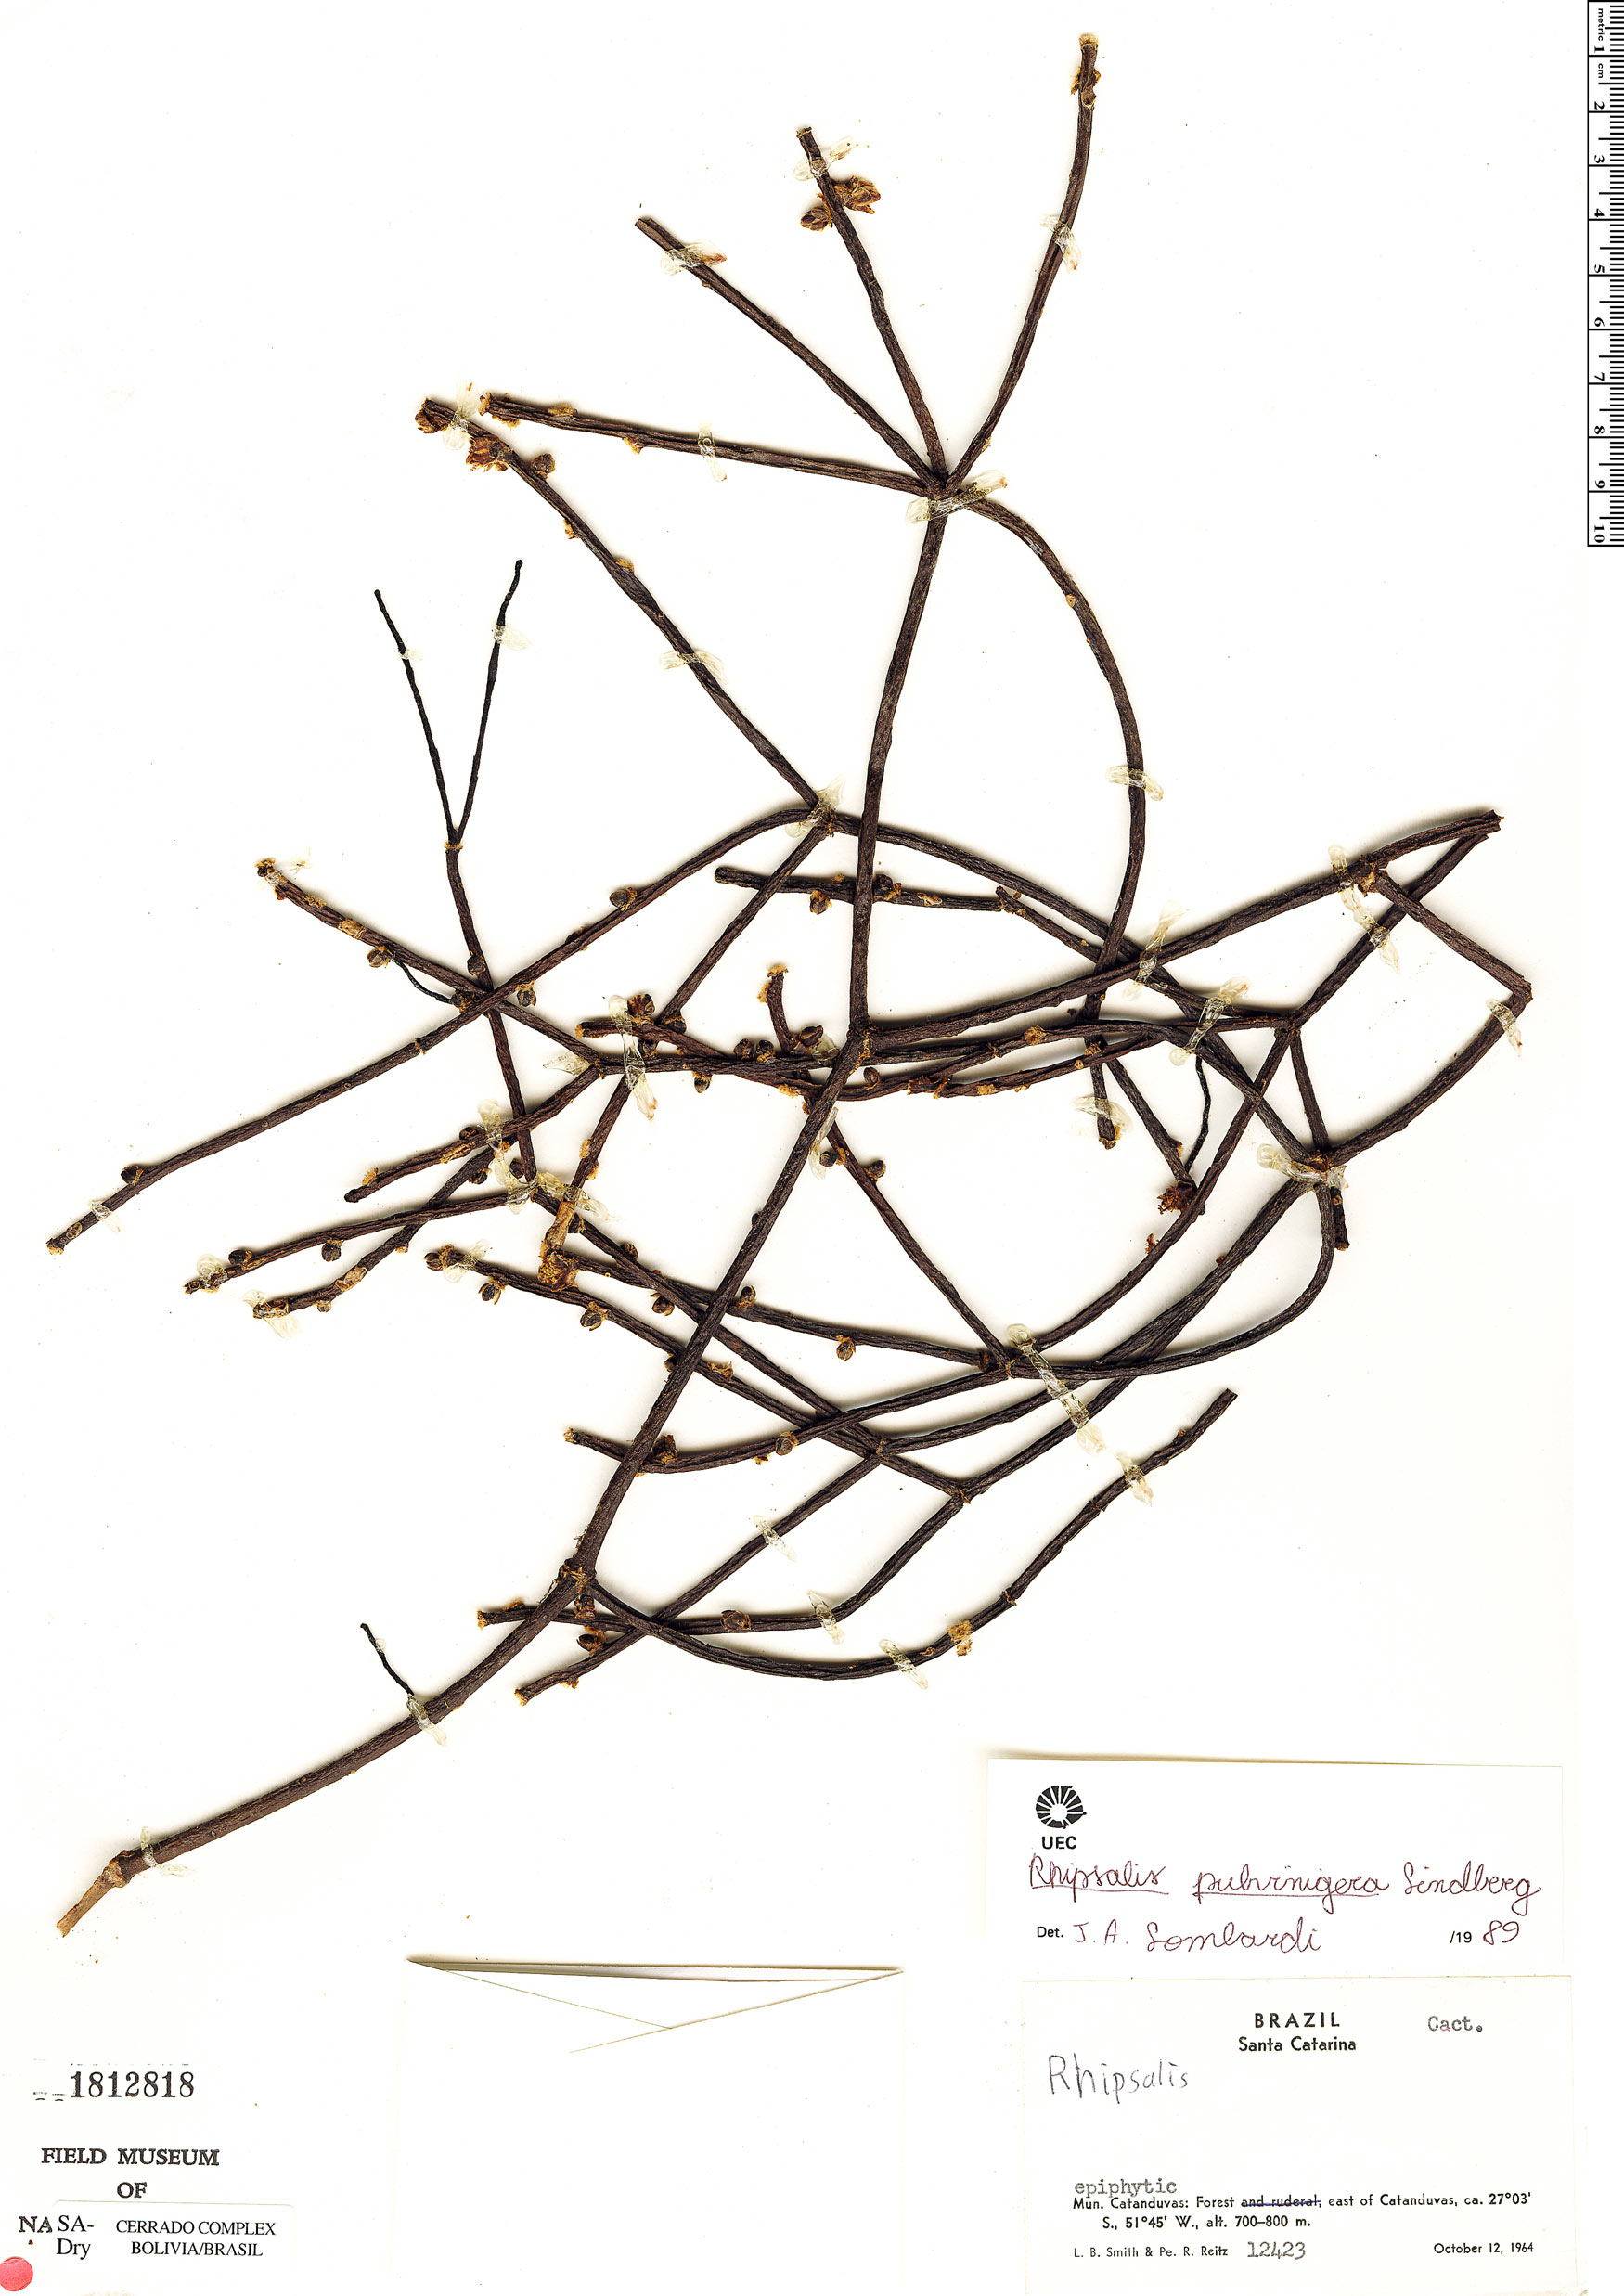 Rhipsalis floccosa subsp. pulvinigera image